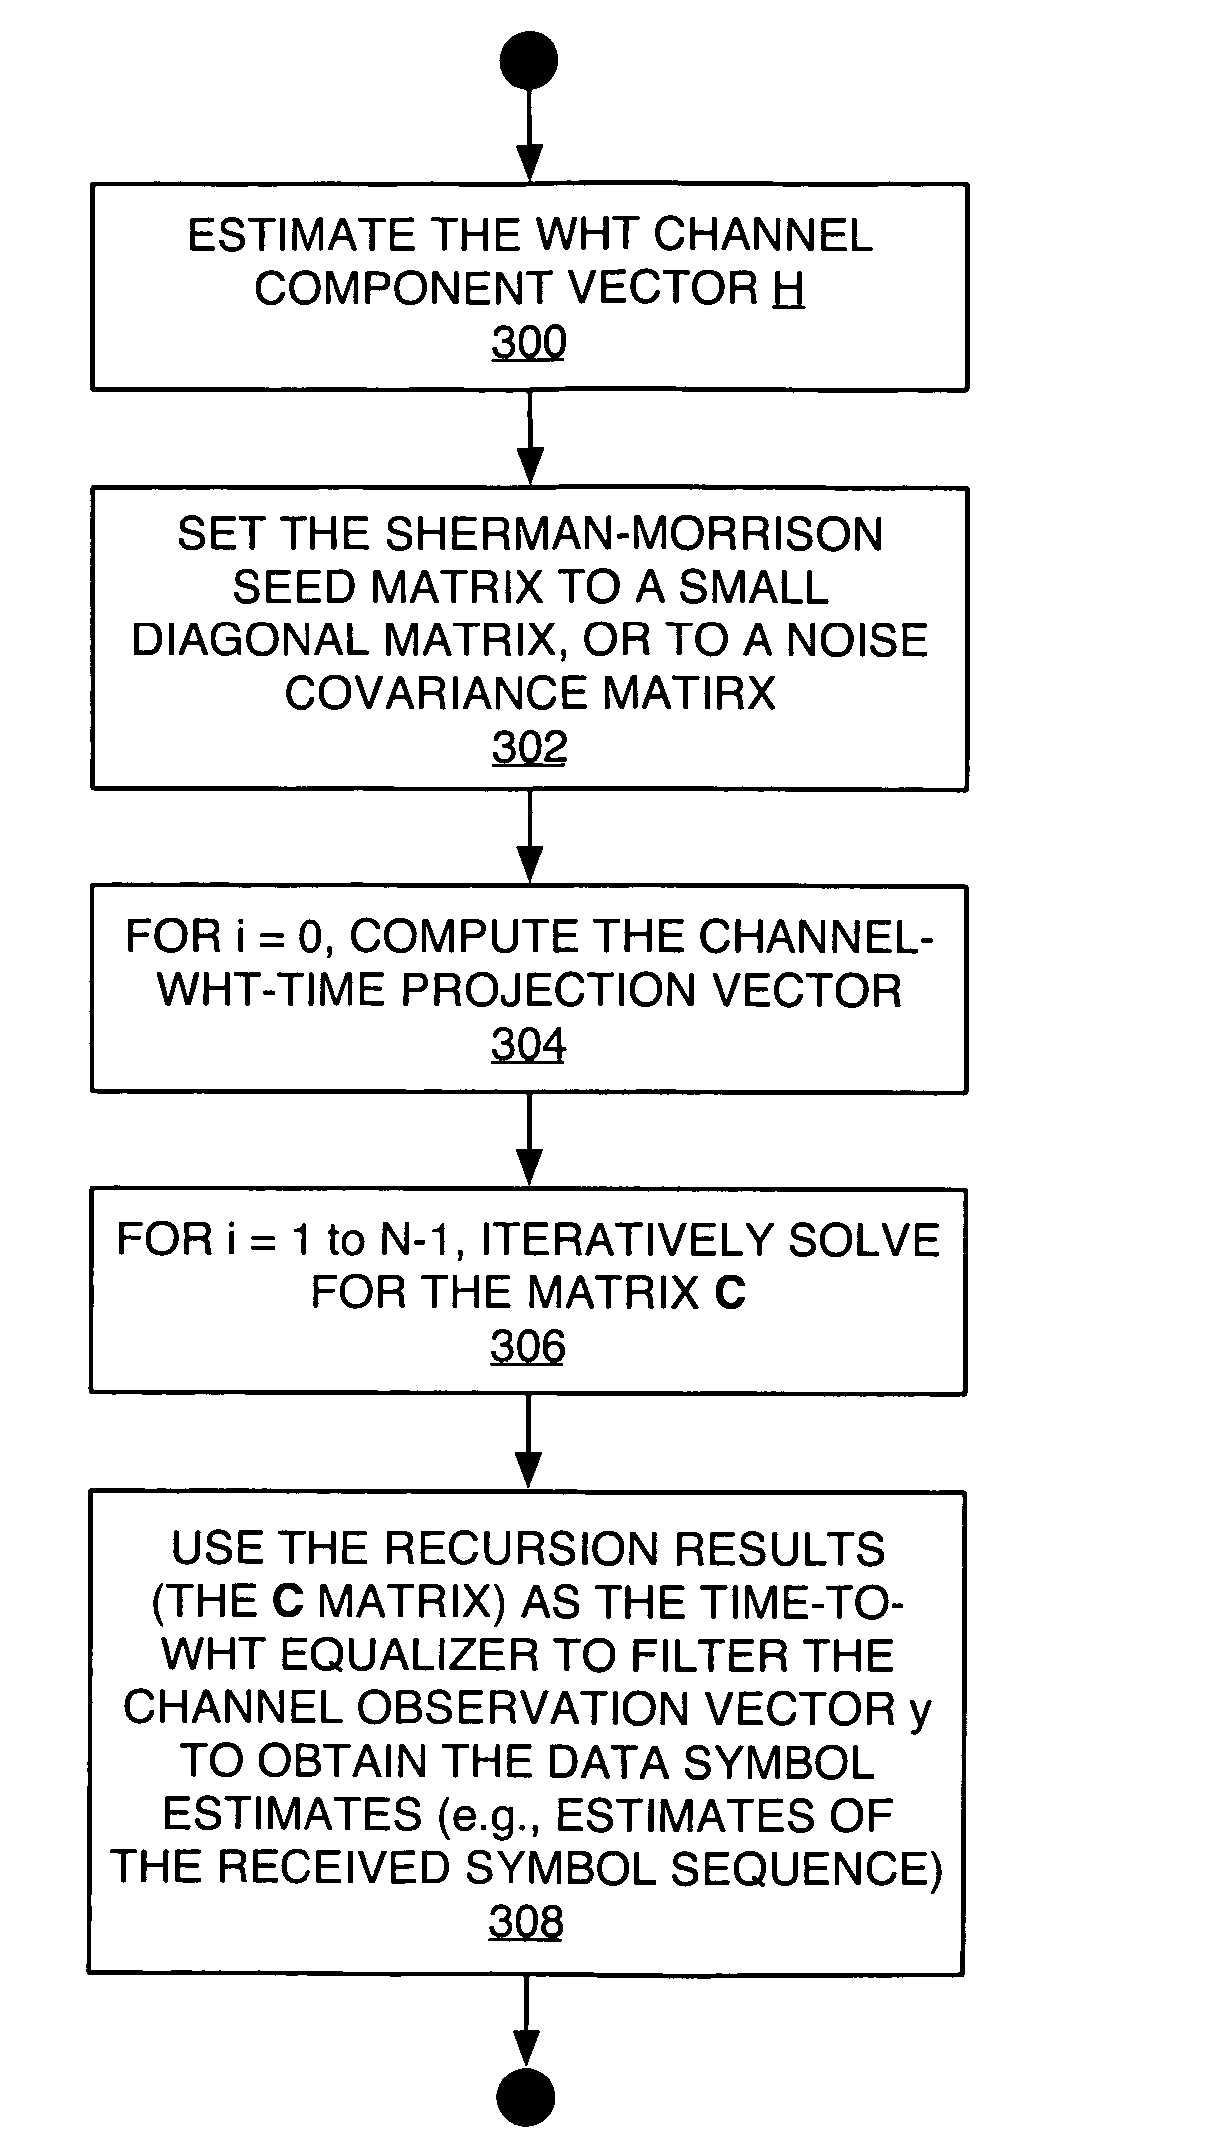 Multicode transmission using Walsh Hadamard transform